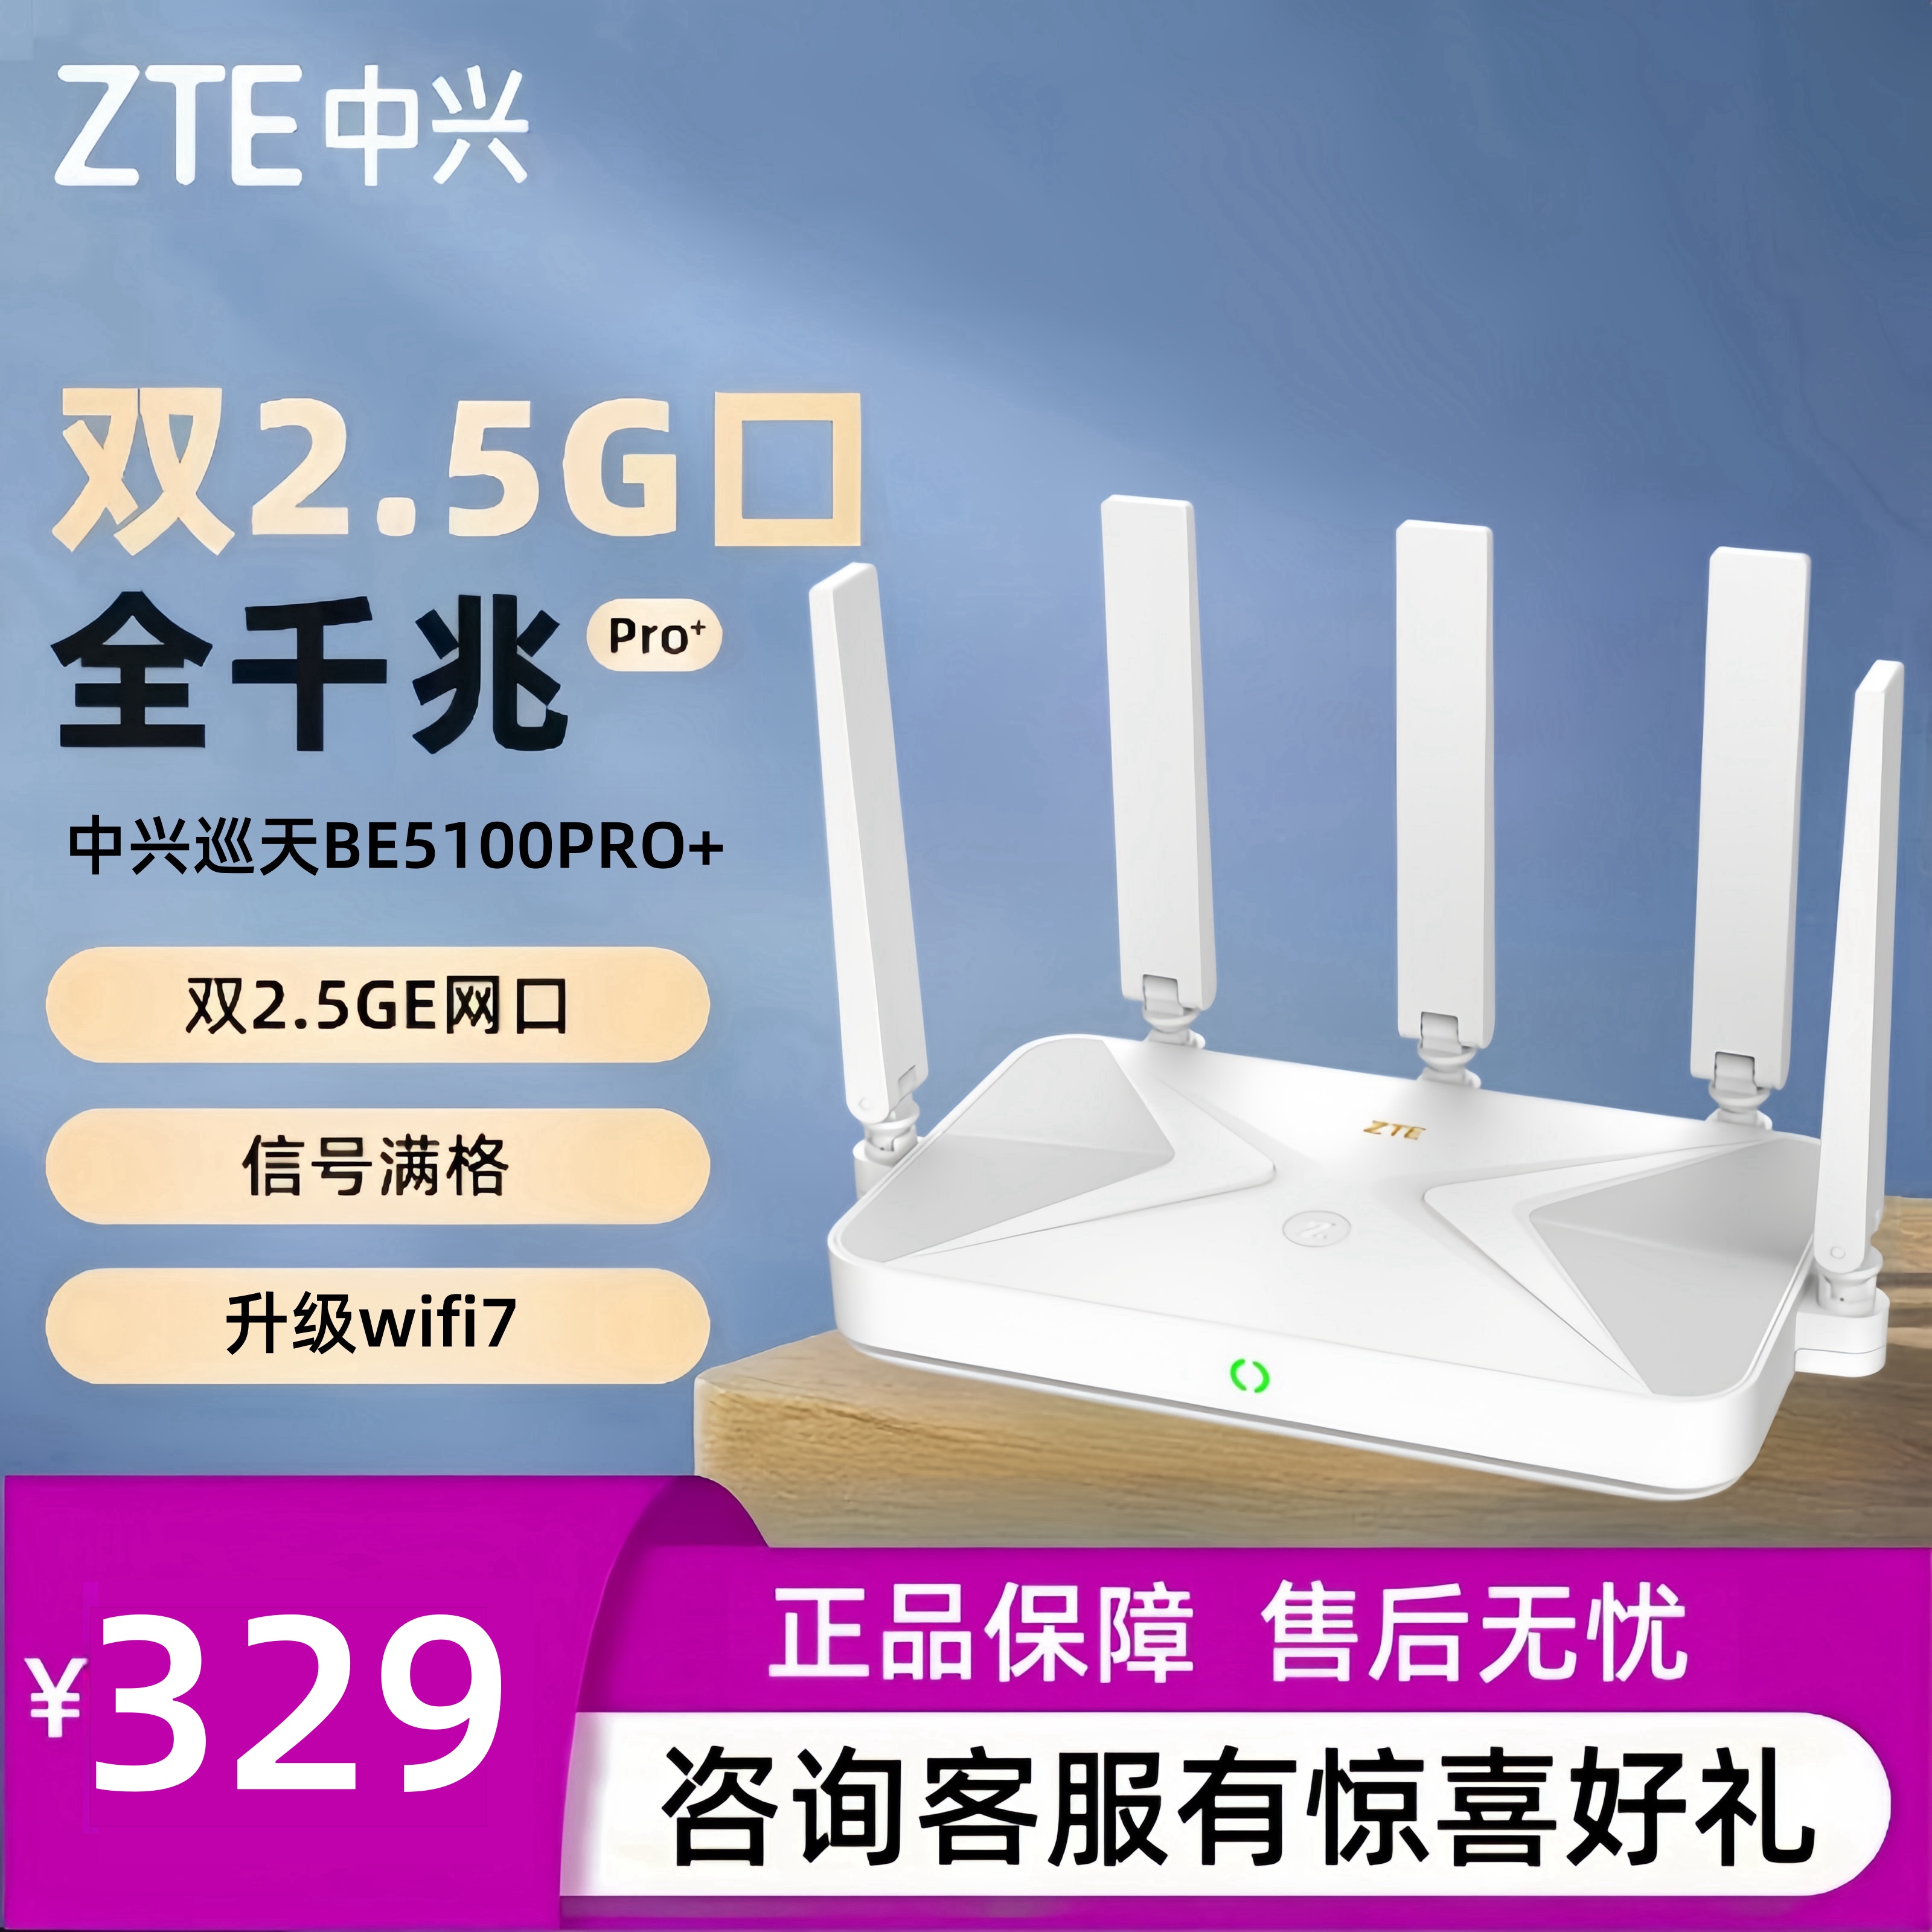 【Wi-Fi7】中兴 WiFi7 BE5100pro+路由器千兆家用高速无线全屋覆盖大户型游戏加速 2.5G网口家用无线路由器